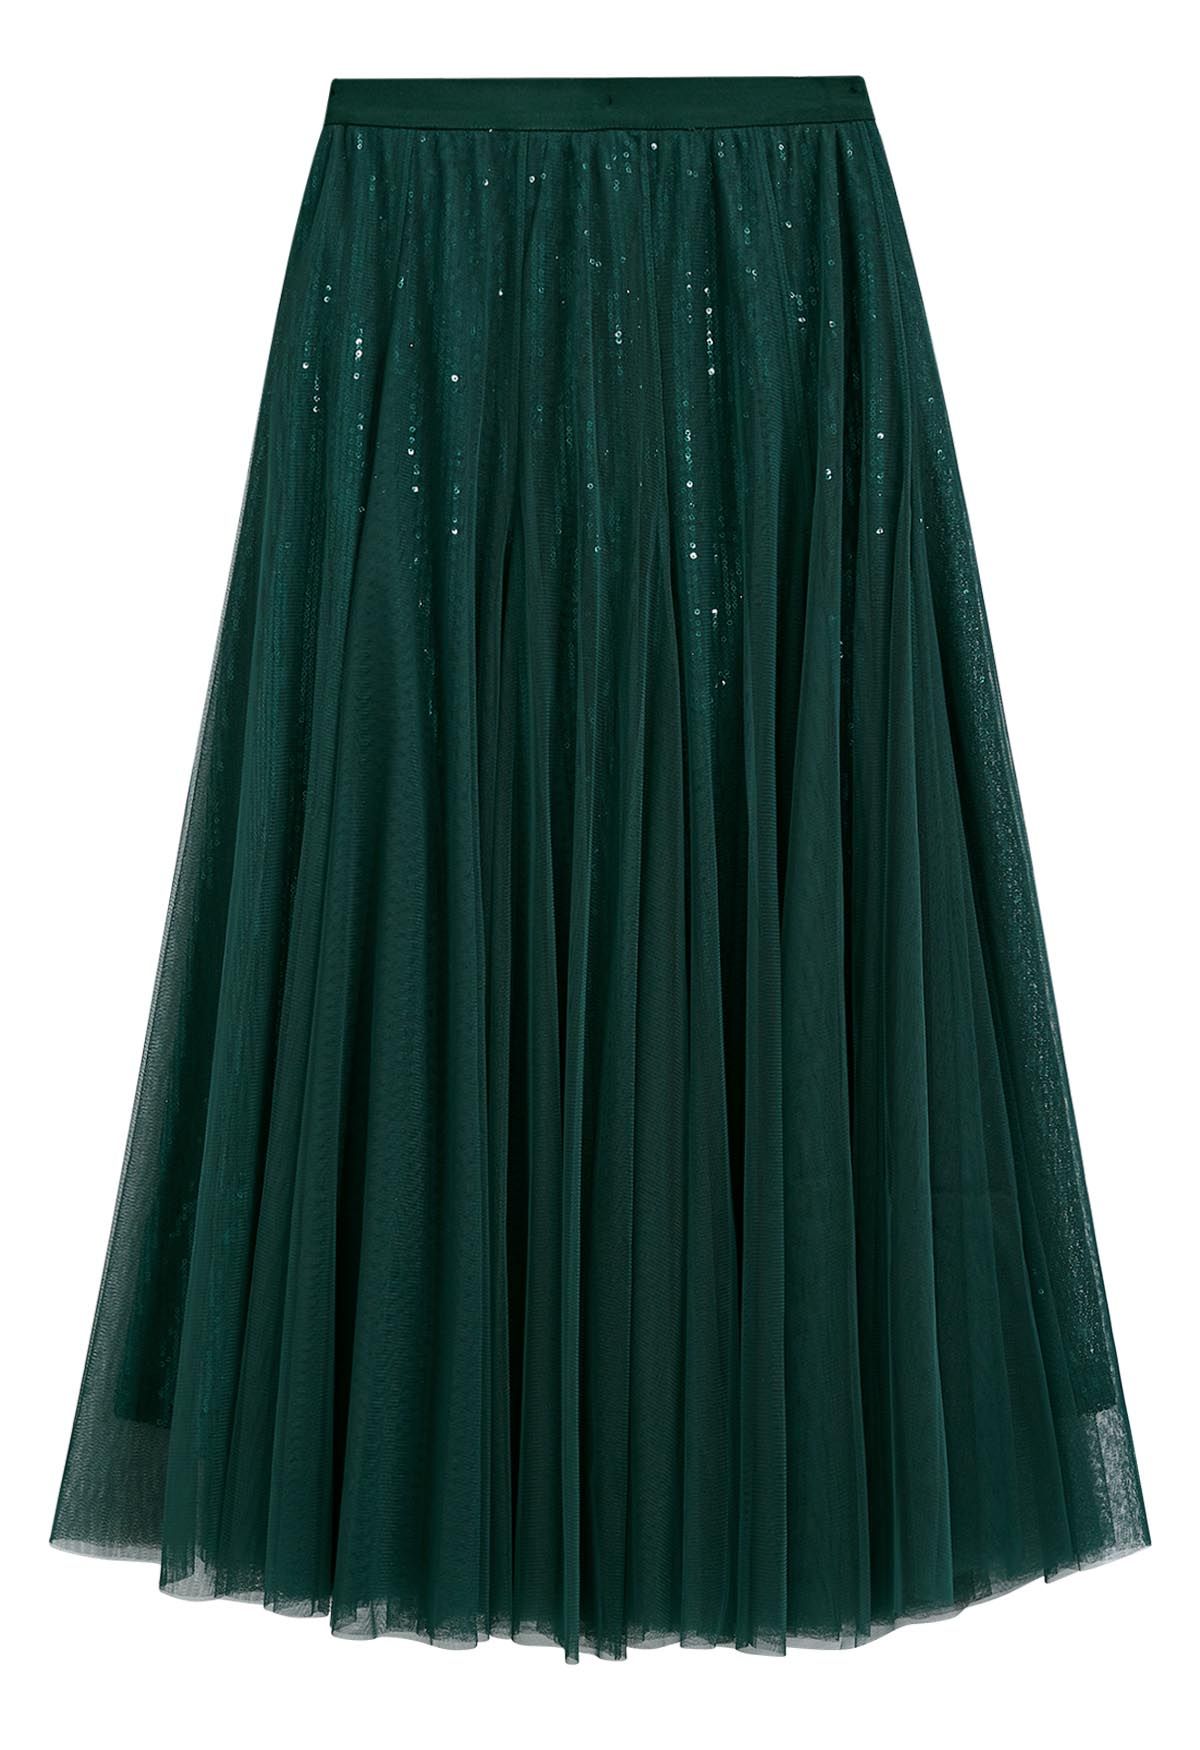 Ravishing Sequins Mesh Tulle Midi Skirt in Dark Green - Retro, Indie ...